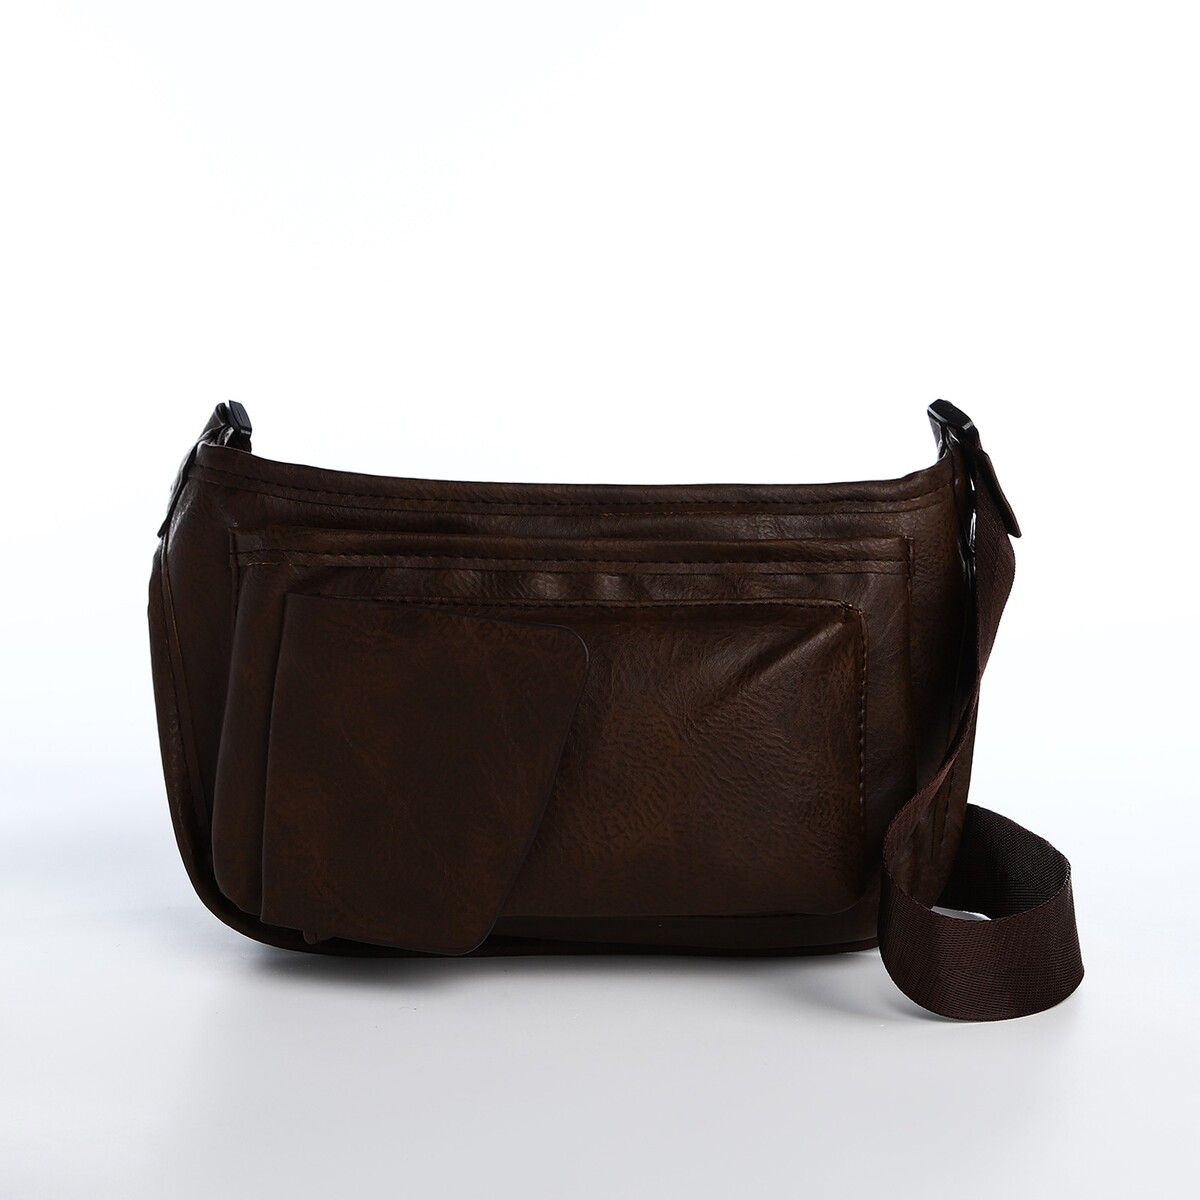 Поясная сумка на молнии, 3 наружных кармана, цвет коричневый поясная сумка для садового инструмента на ремне 3 кармана